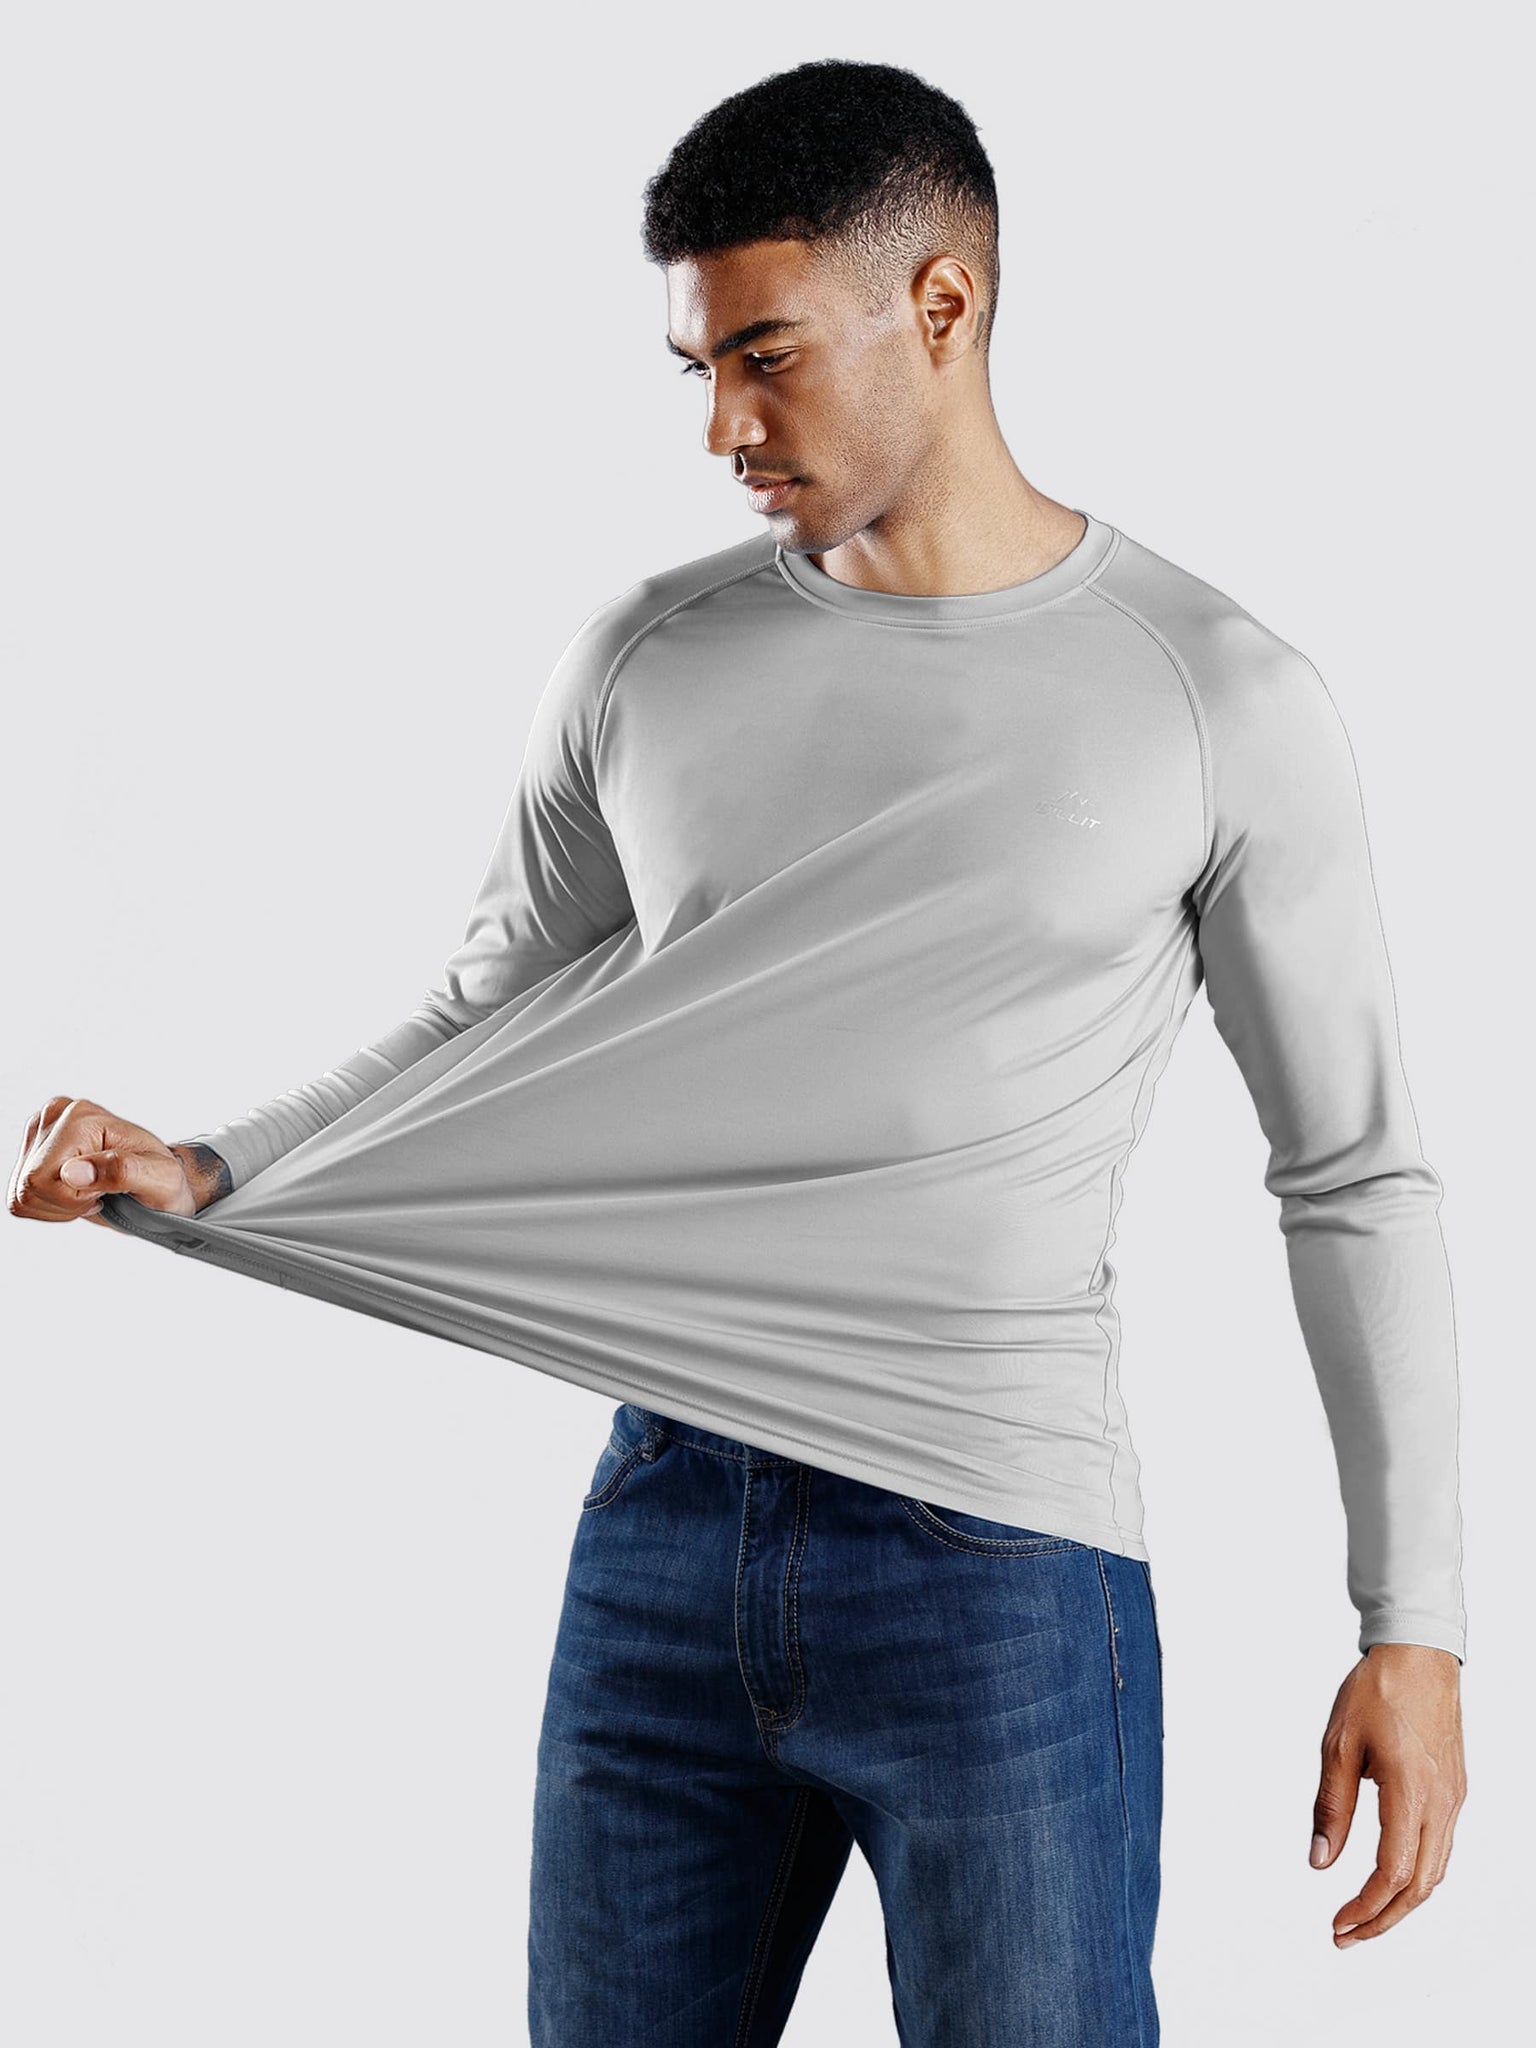 Willit Men's Sun Protection Long Sleeve Shirts_Gray_model2